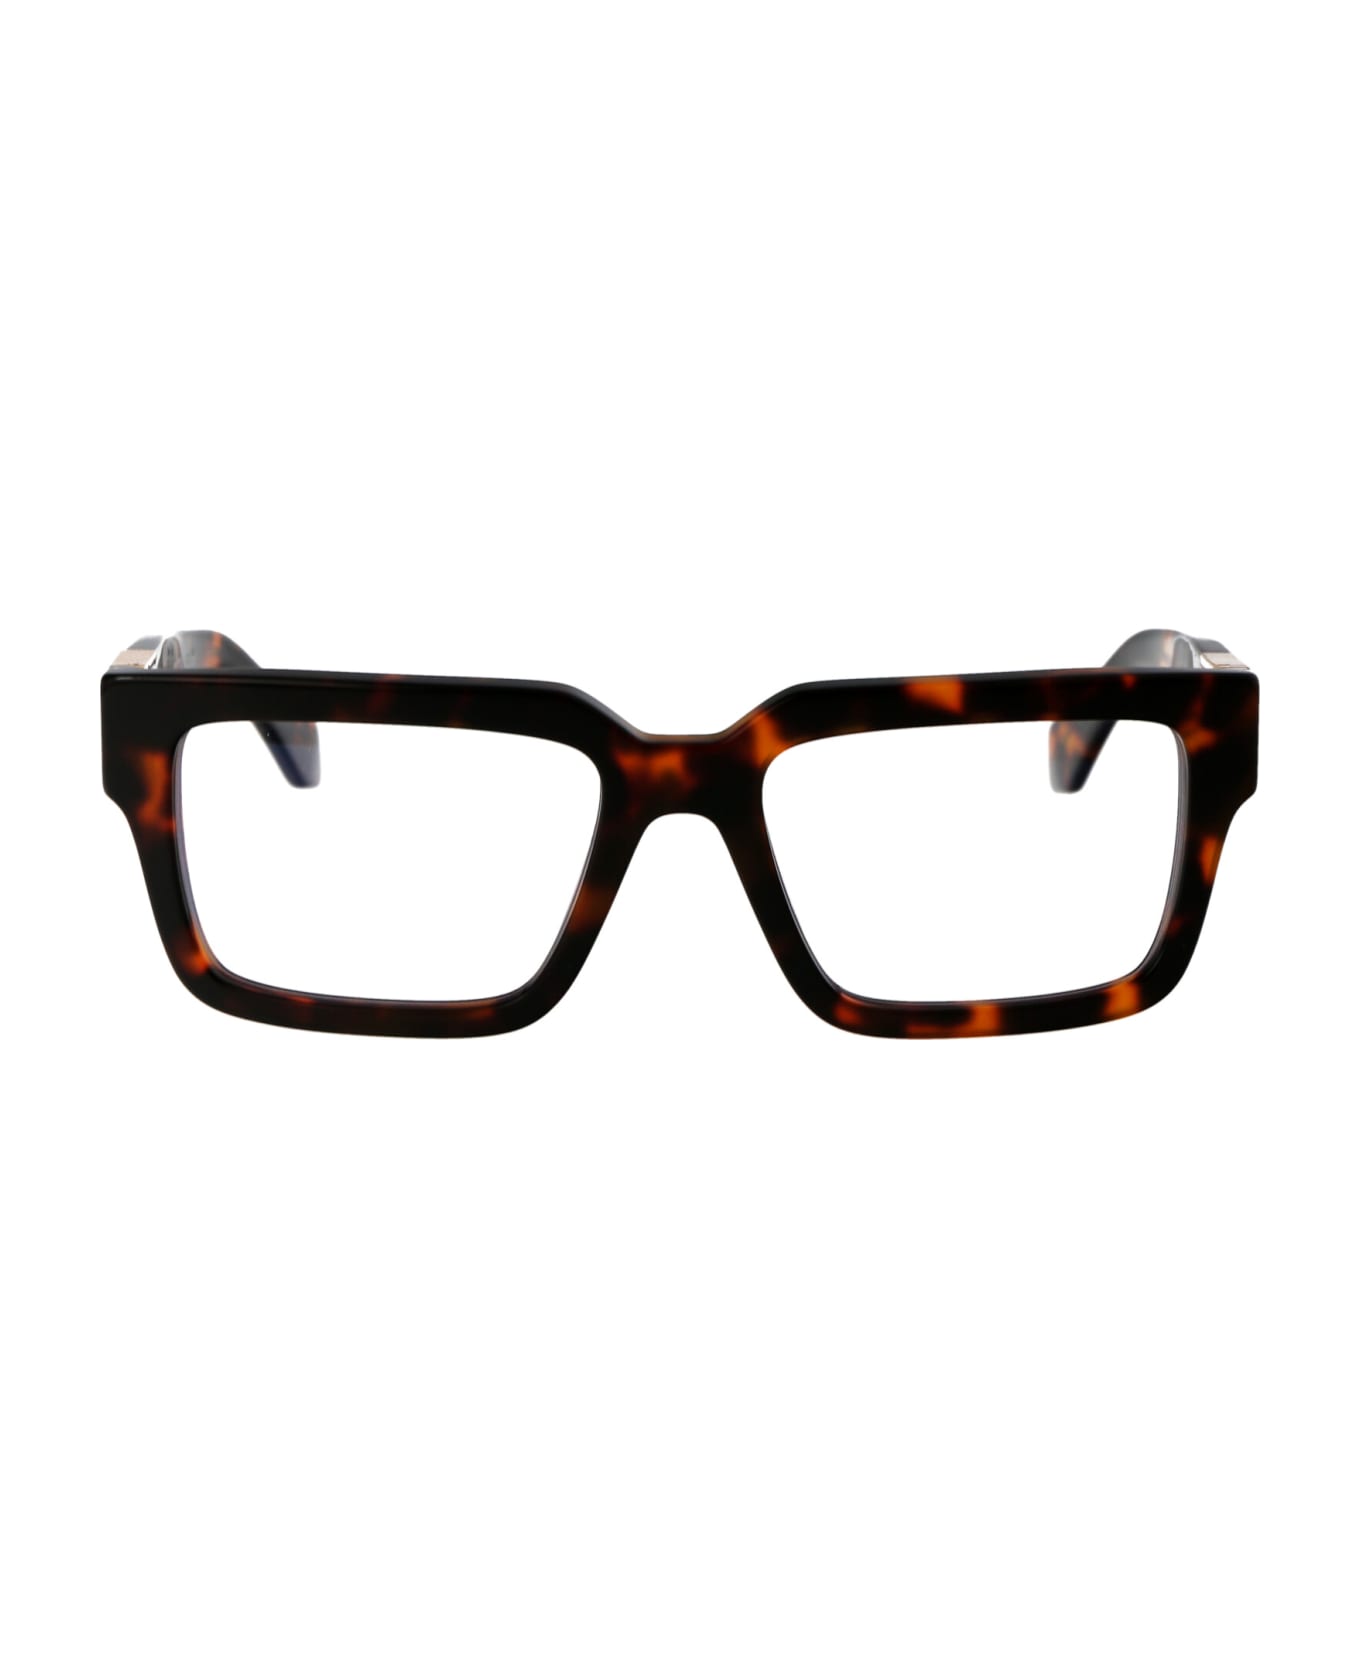 Off-White Optical Style 15 Glasses - 6000 HAVANA アイウェア